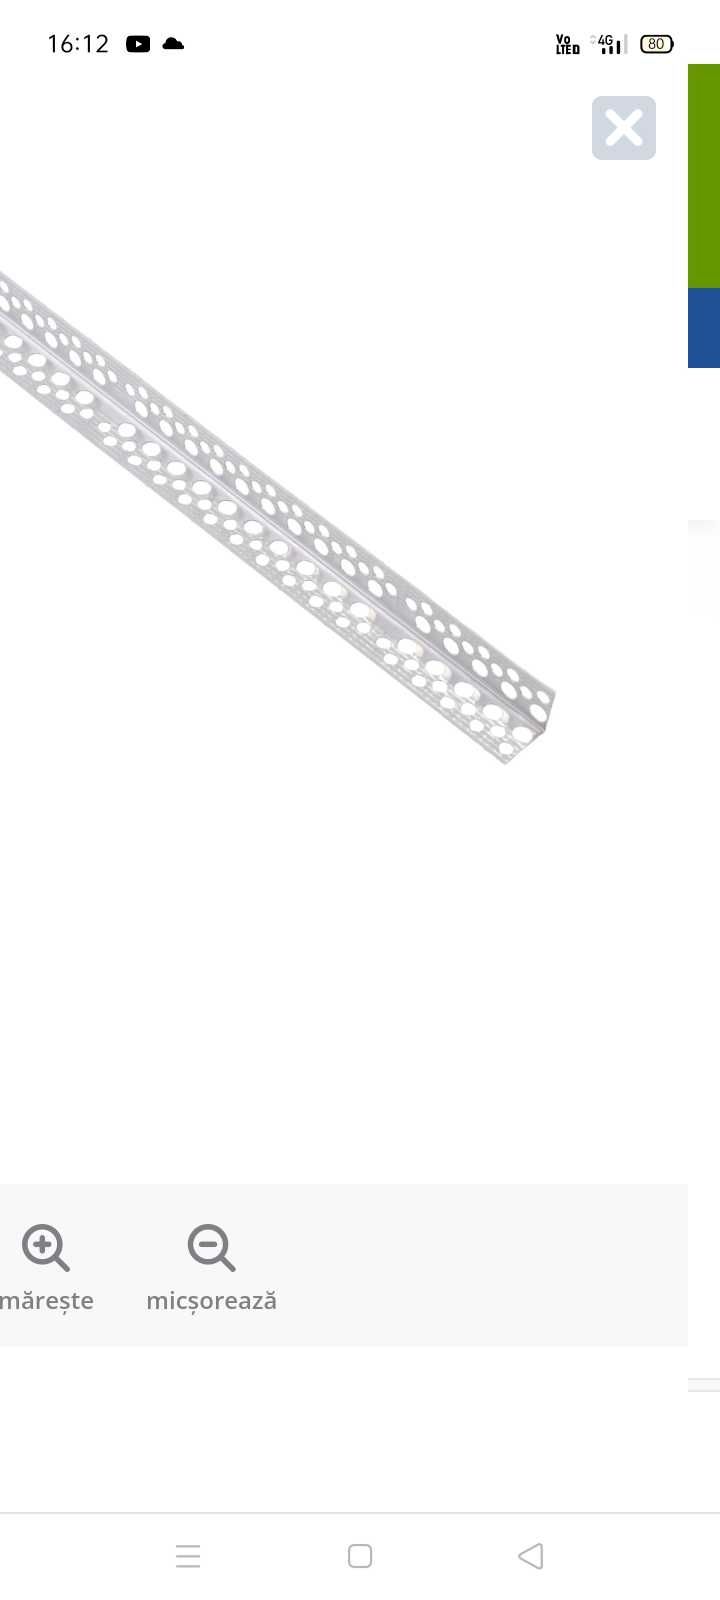 Profile de colt coltare aluminiu dimensiune 3×3cm 3m lungime